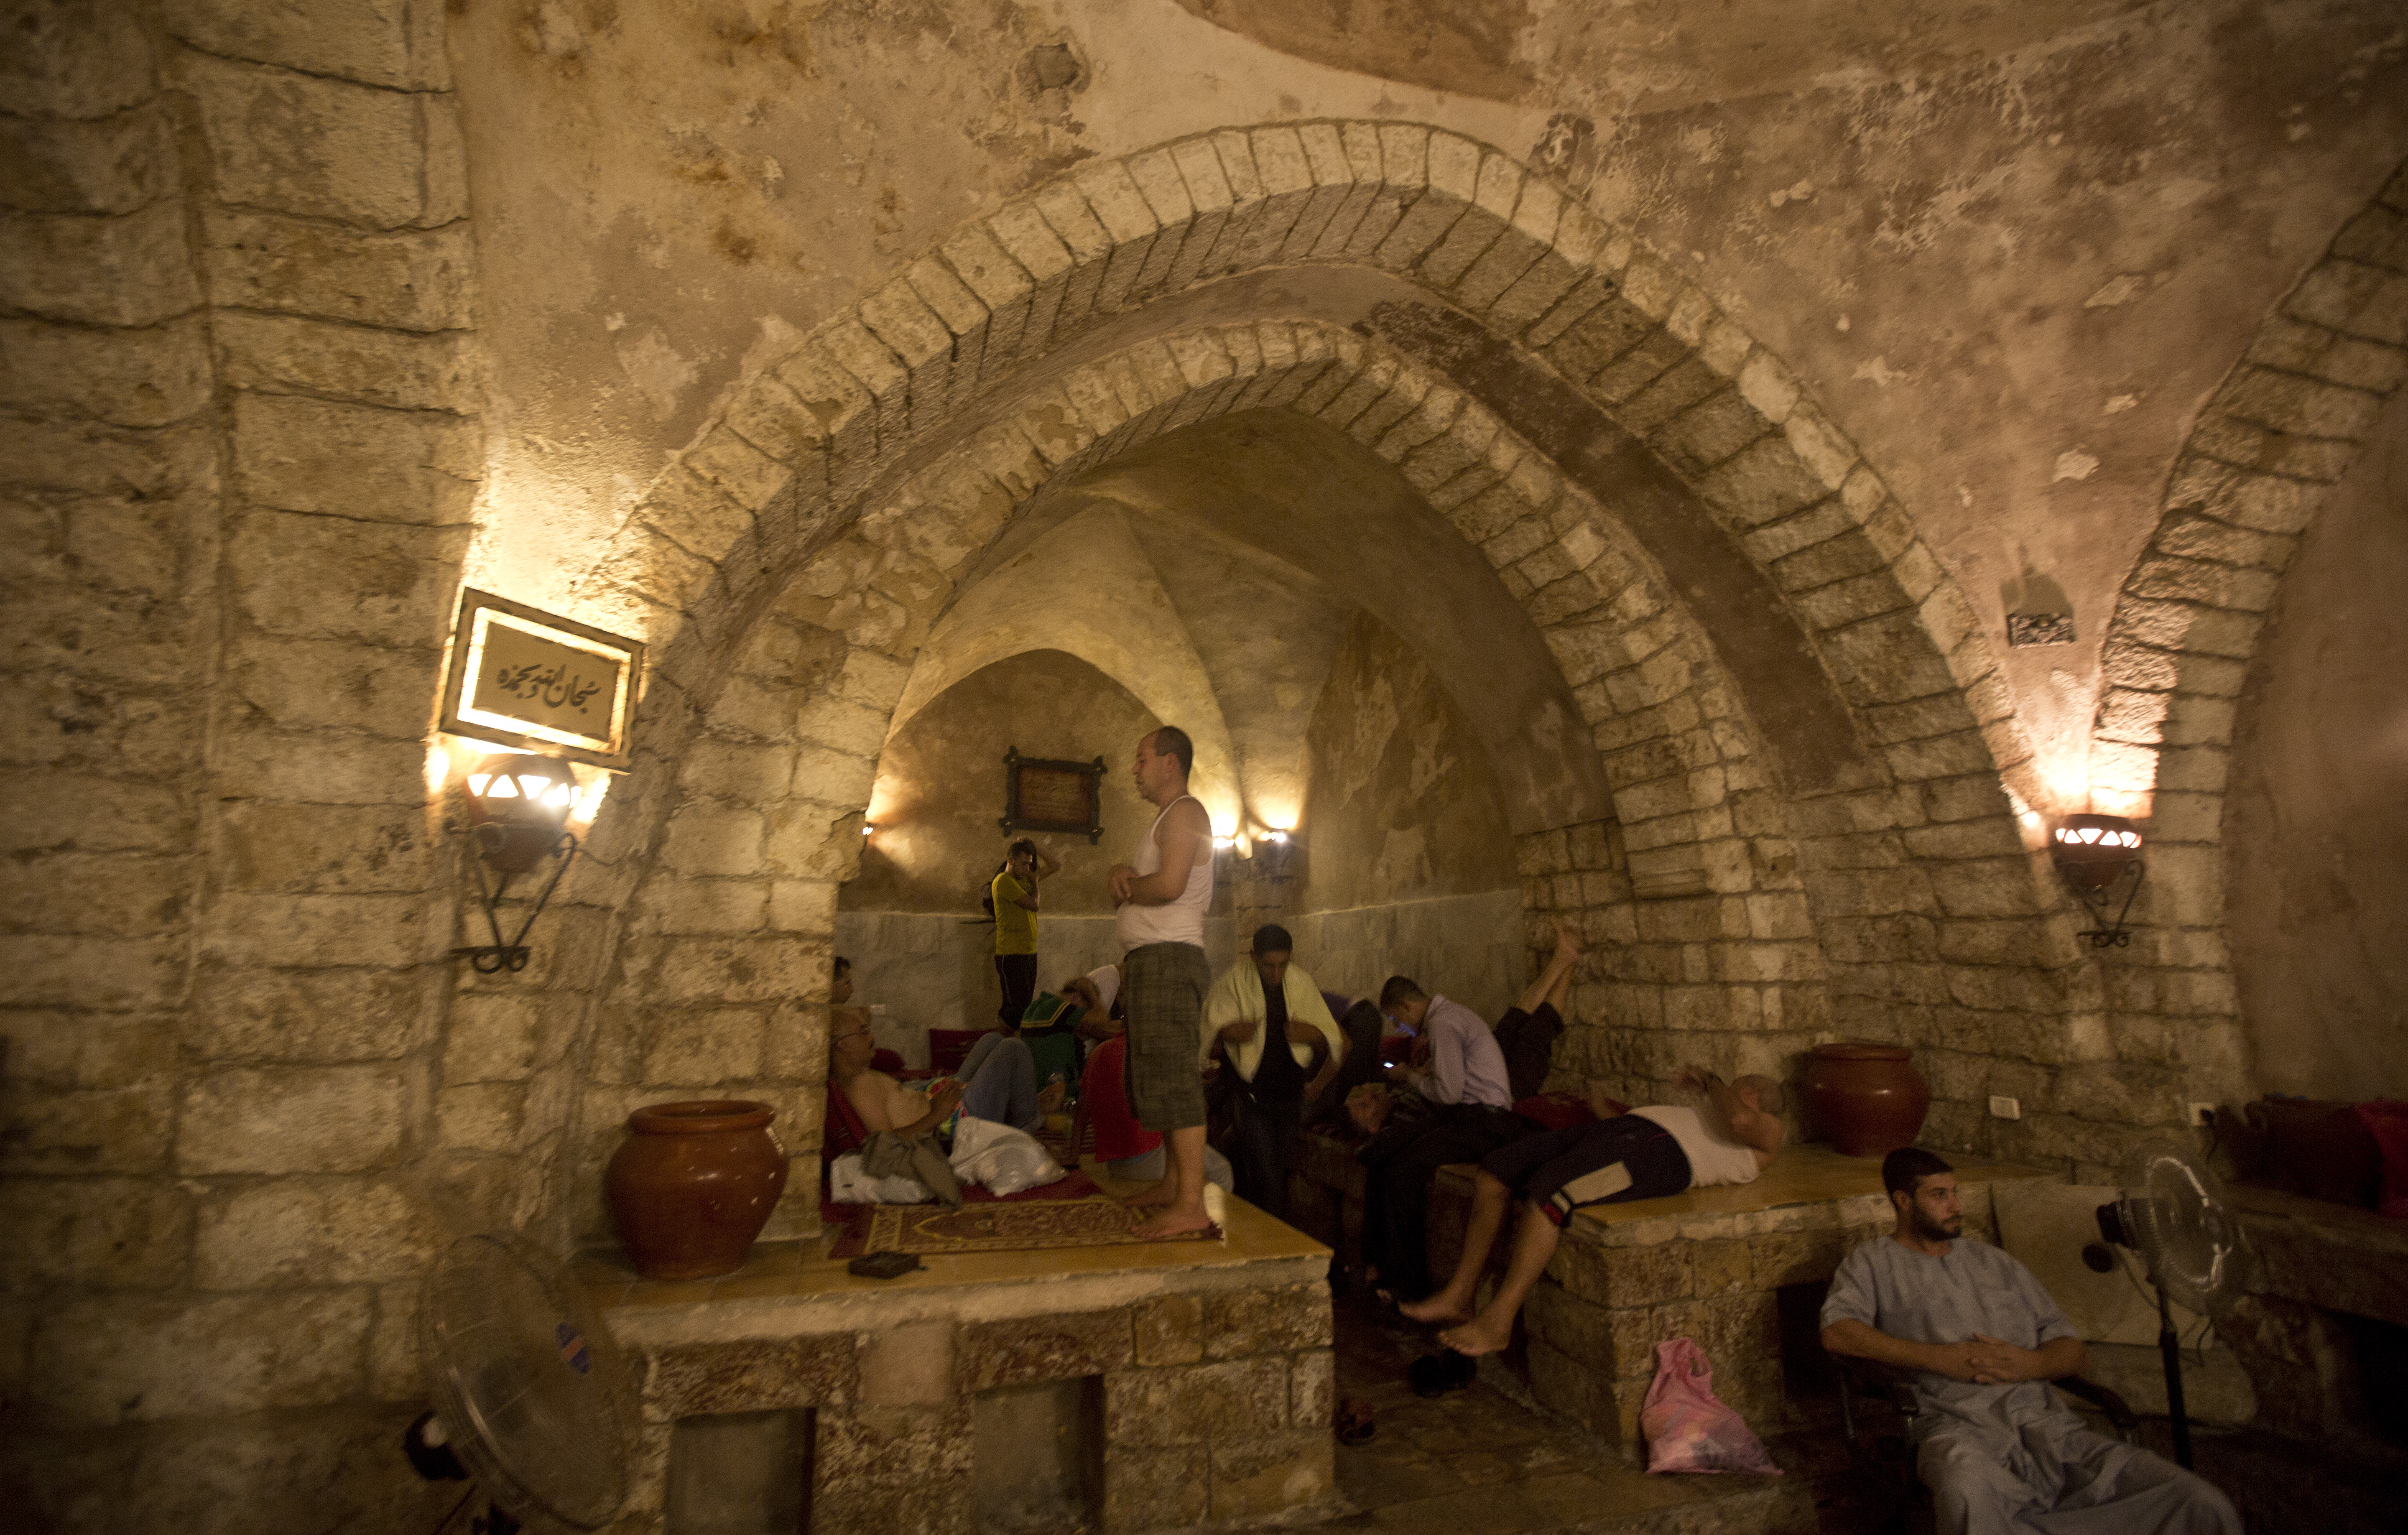 Gaza Historical Photos and Memorabilia Find Permanent Home